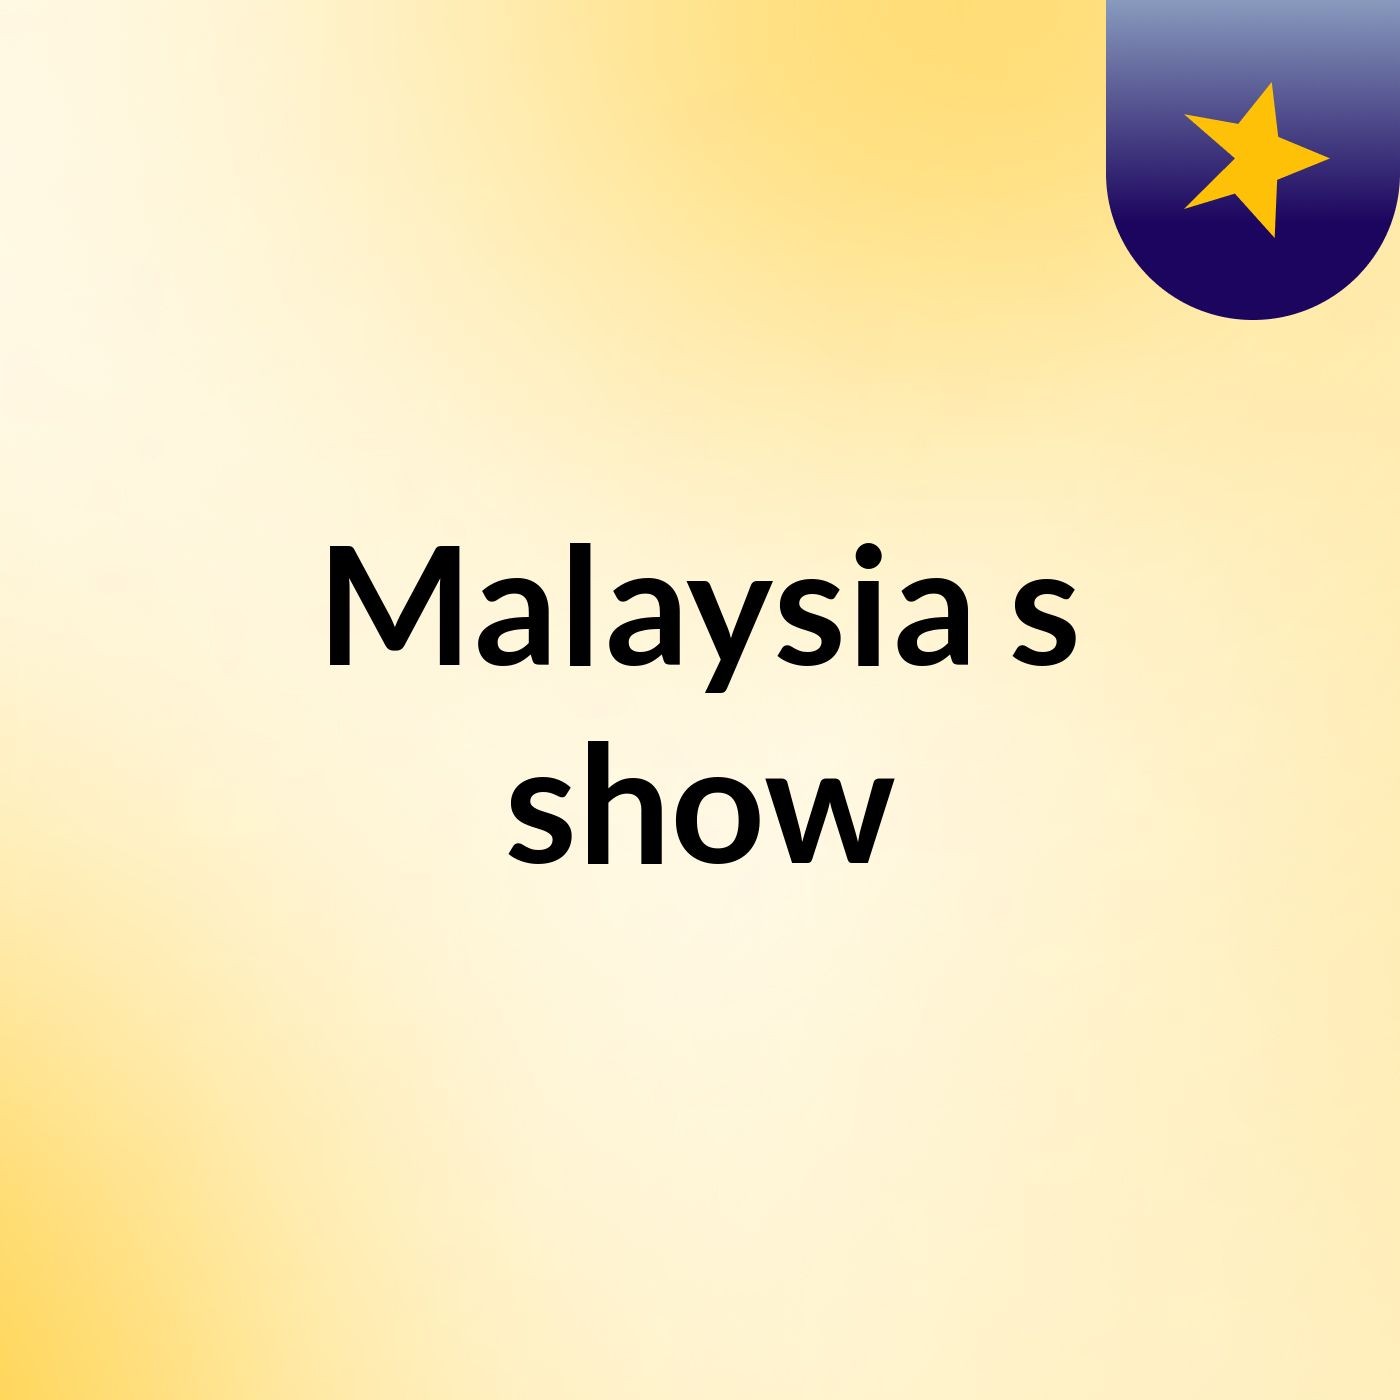 Malaysia's show